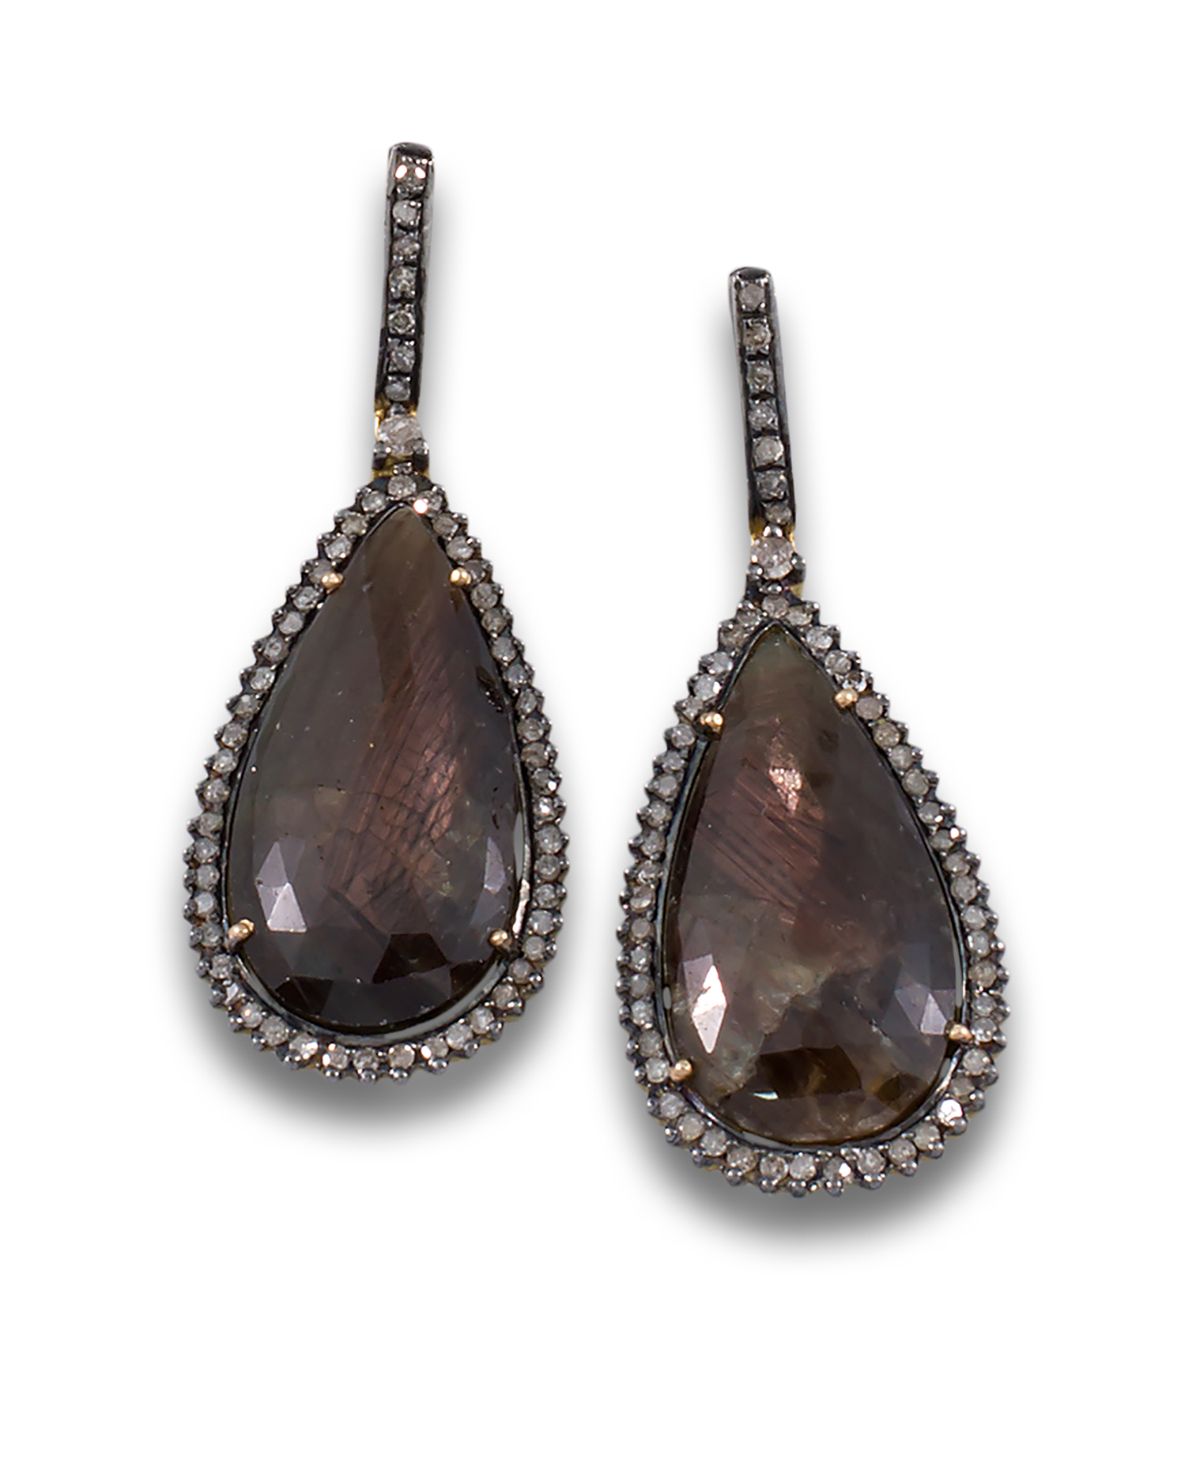 JAIPUR EARRINGS GOLD SILVER DIAMONDS 1.27 ZAF 34C Long earrings of Jaipur origin&hellip;